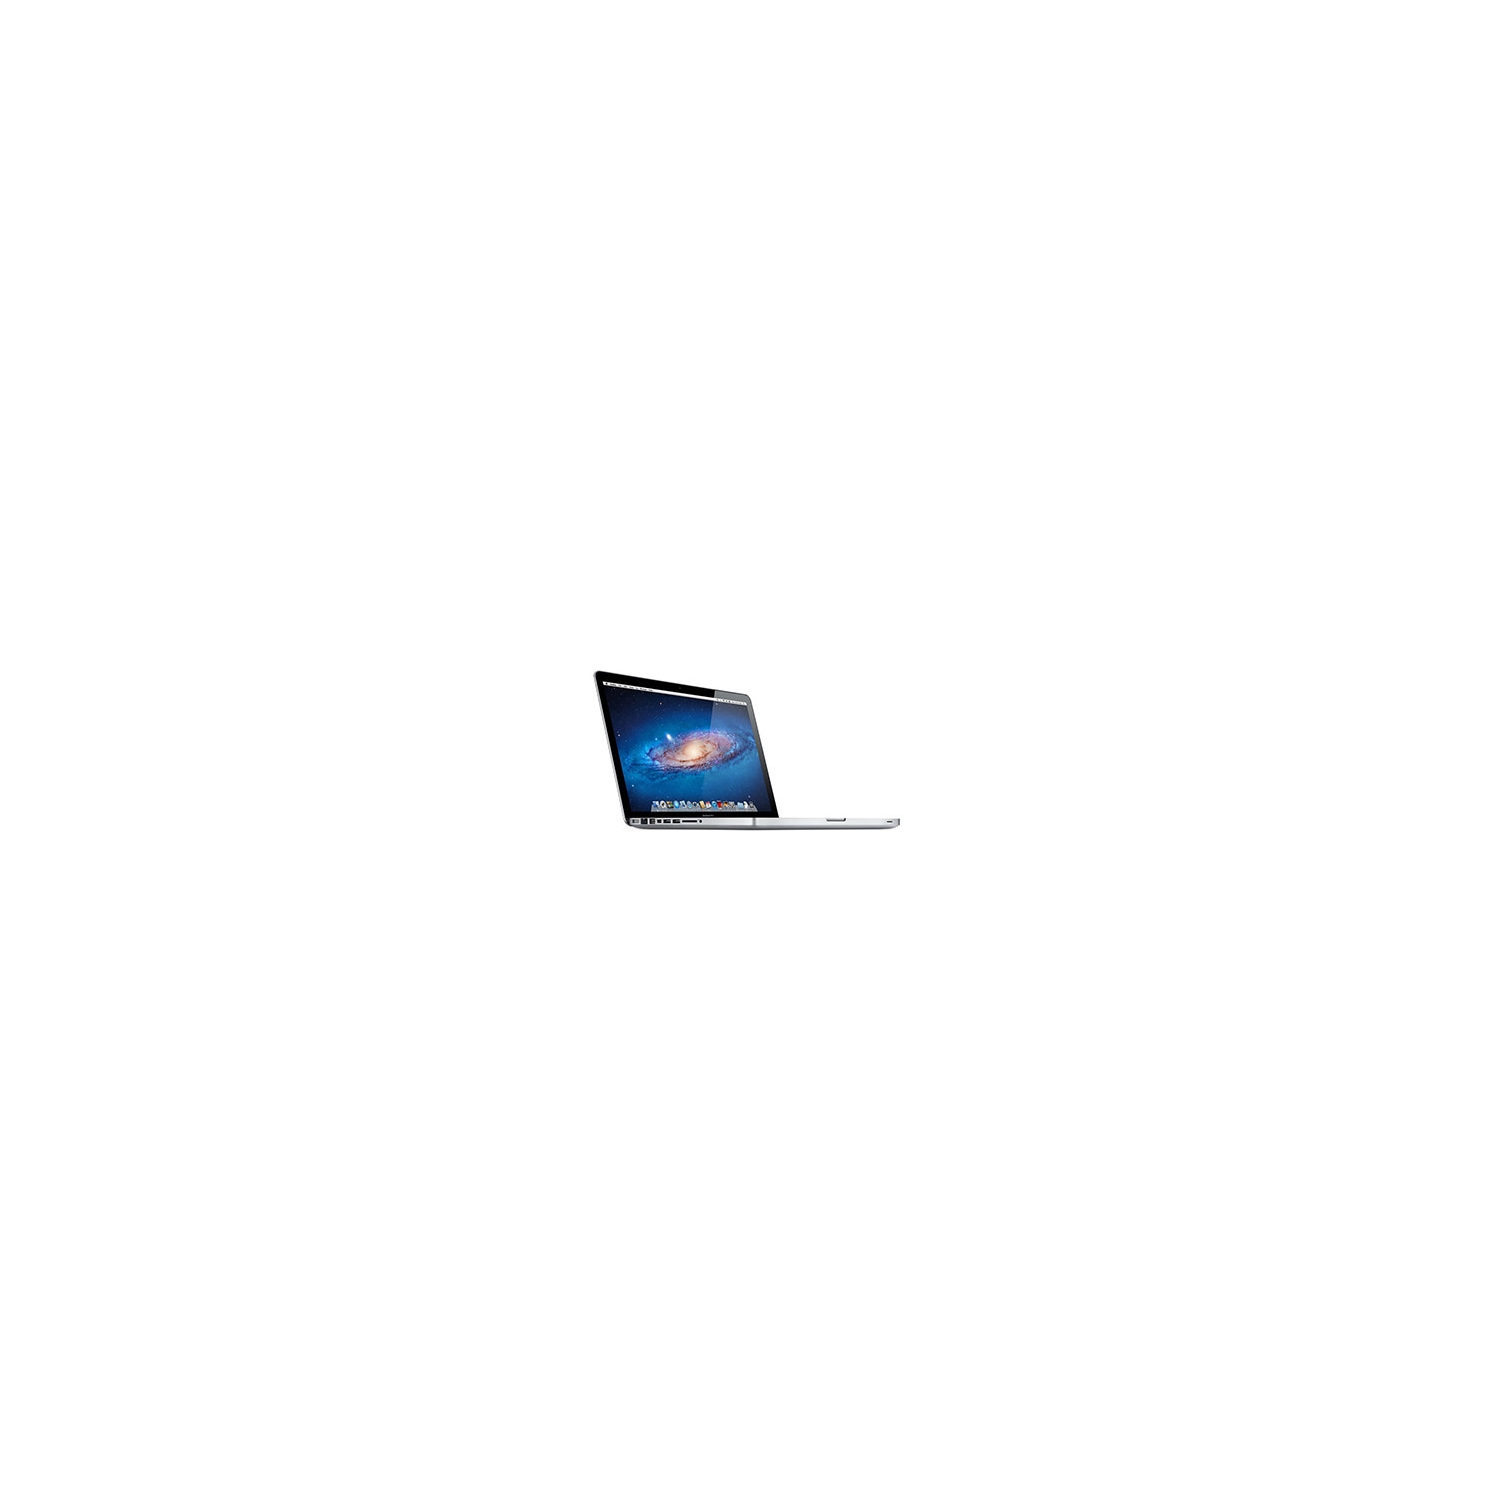 Refurbished (Good) - Apple MacBook Pro 13.3" (Intel Core i5 2.5GHz/500GB HDD/4GB RAM/SuperDrive) - (2012) - English - Grade A